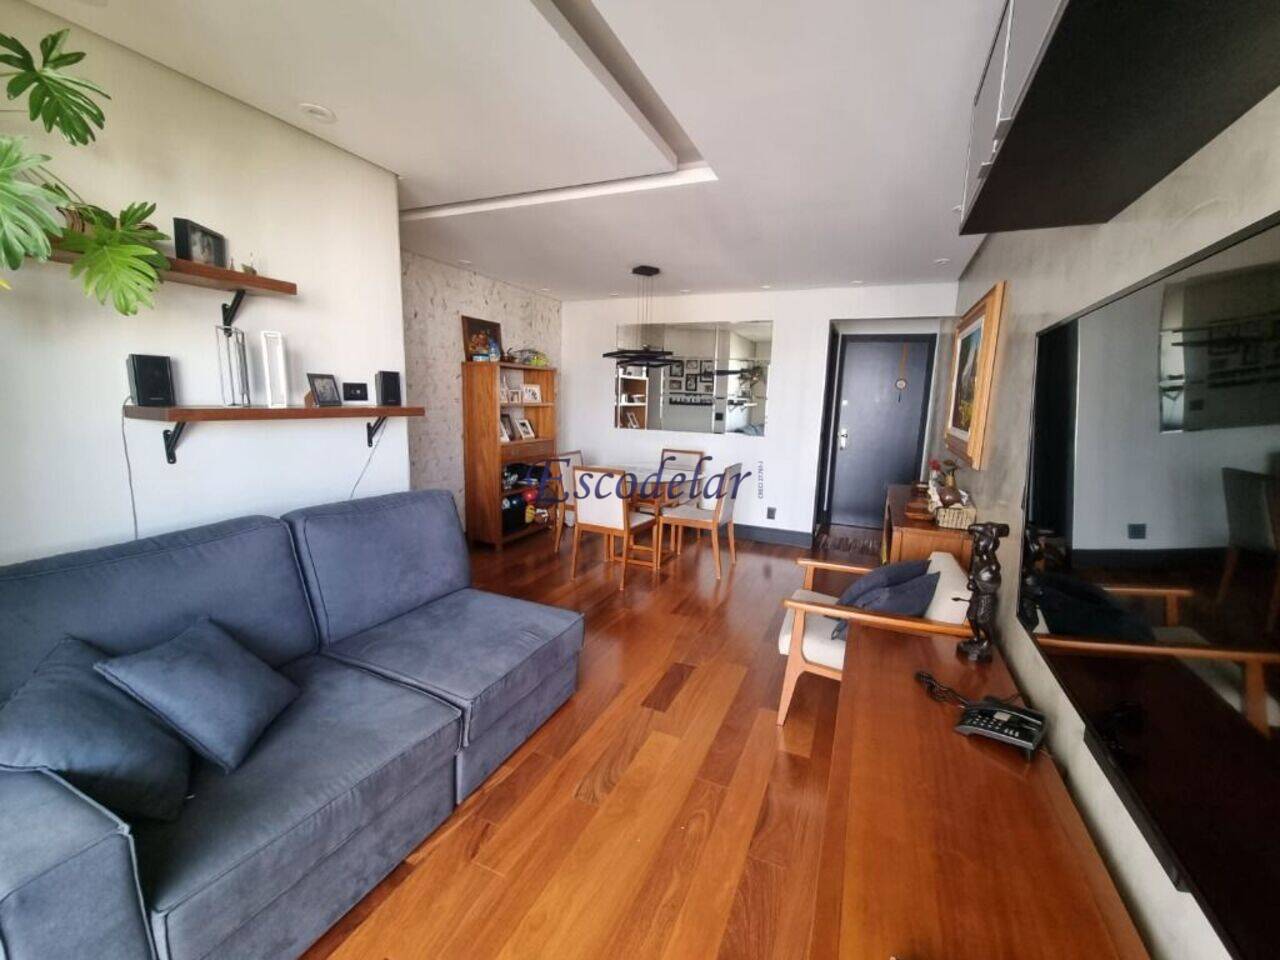 Apartamento Lauzane Paulista, São Paulo - SP